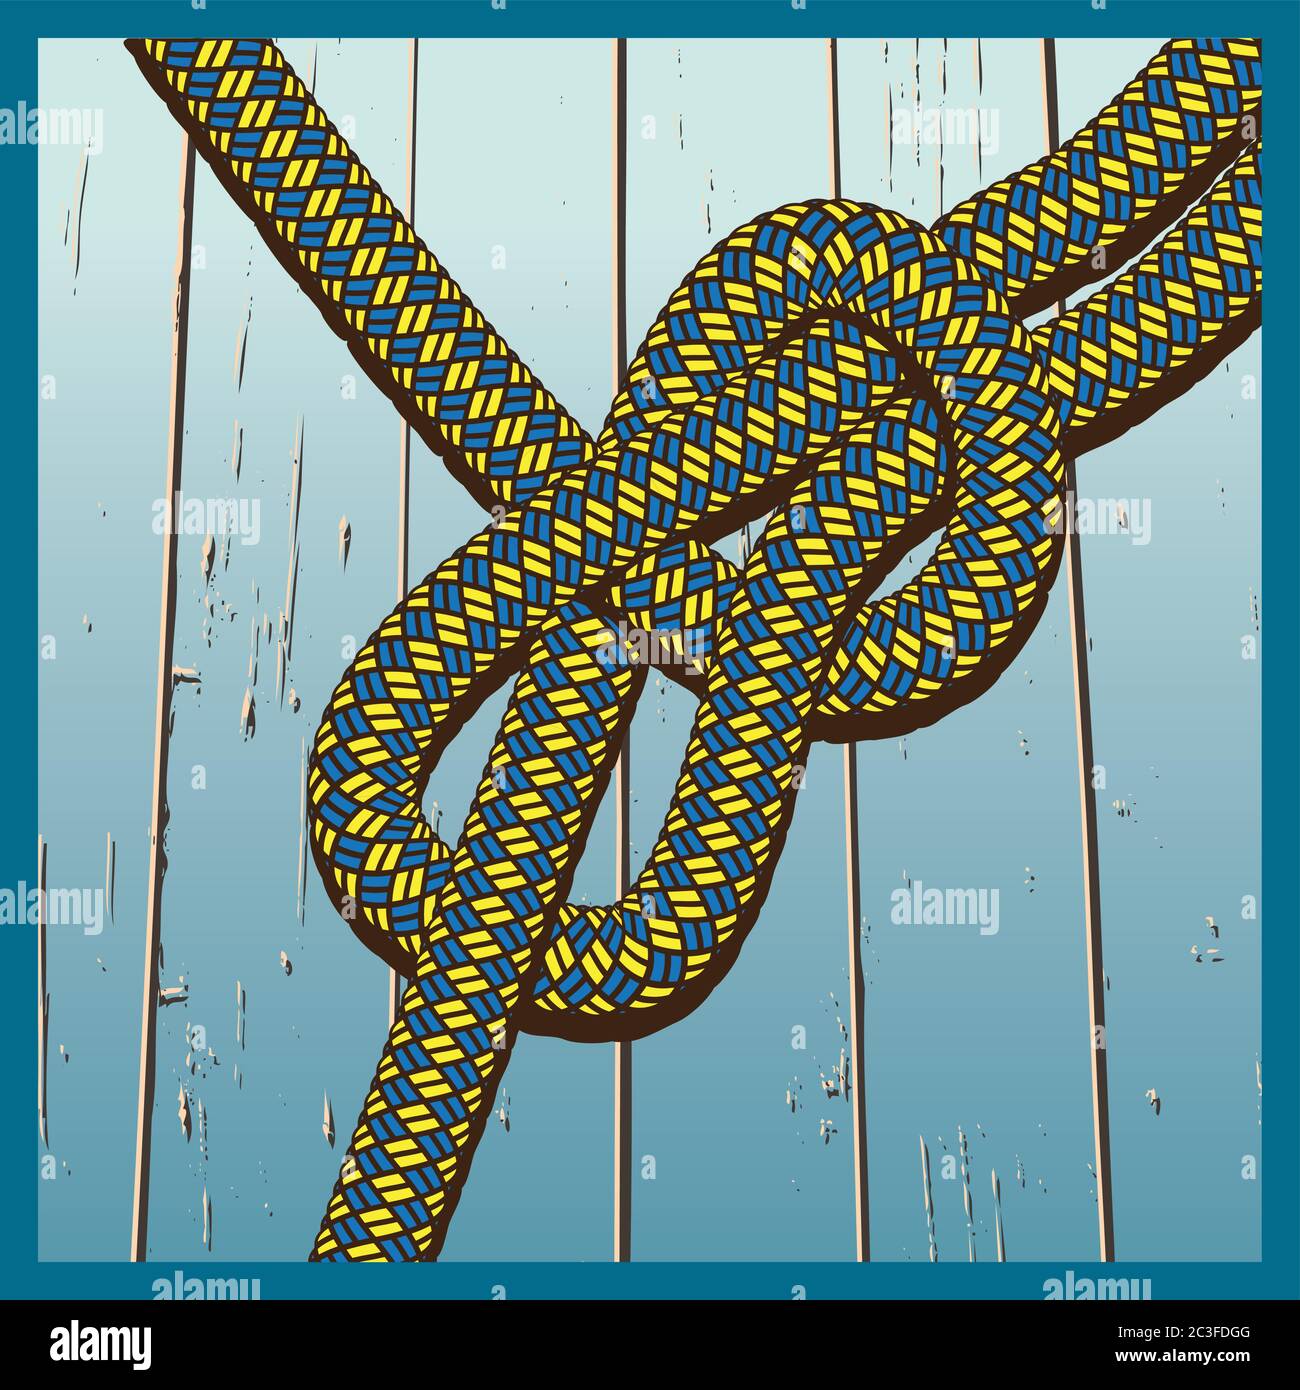 Sailors knots Stock Vector Images - Alamy